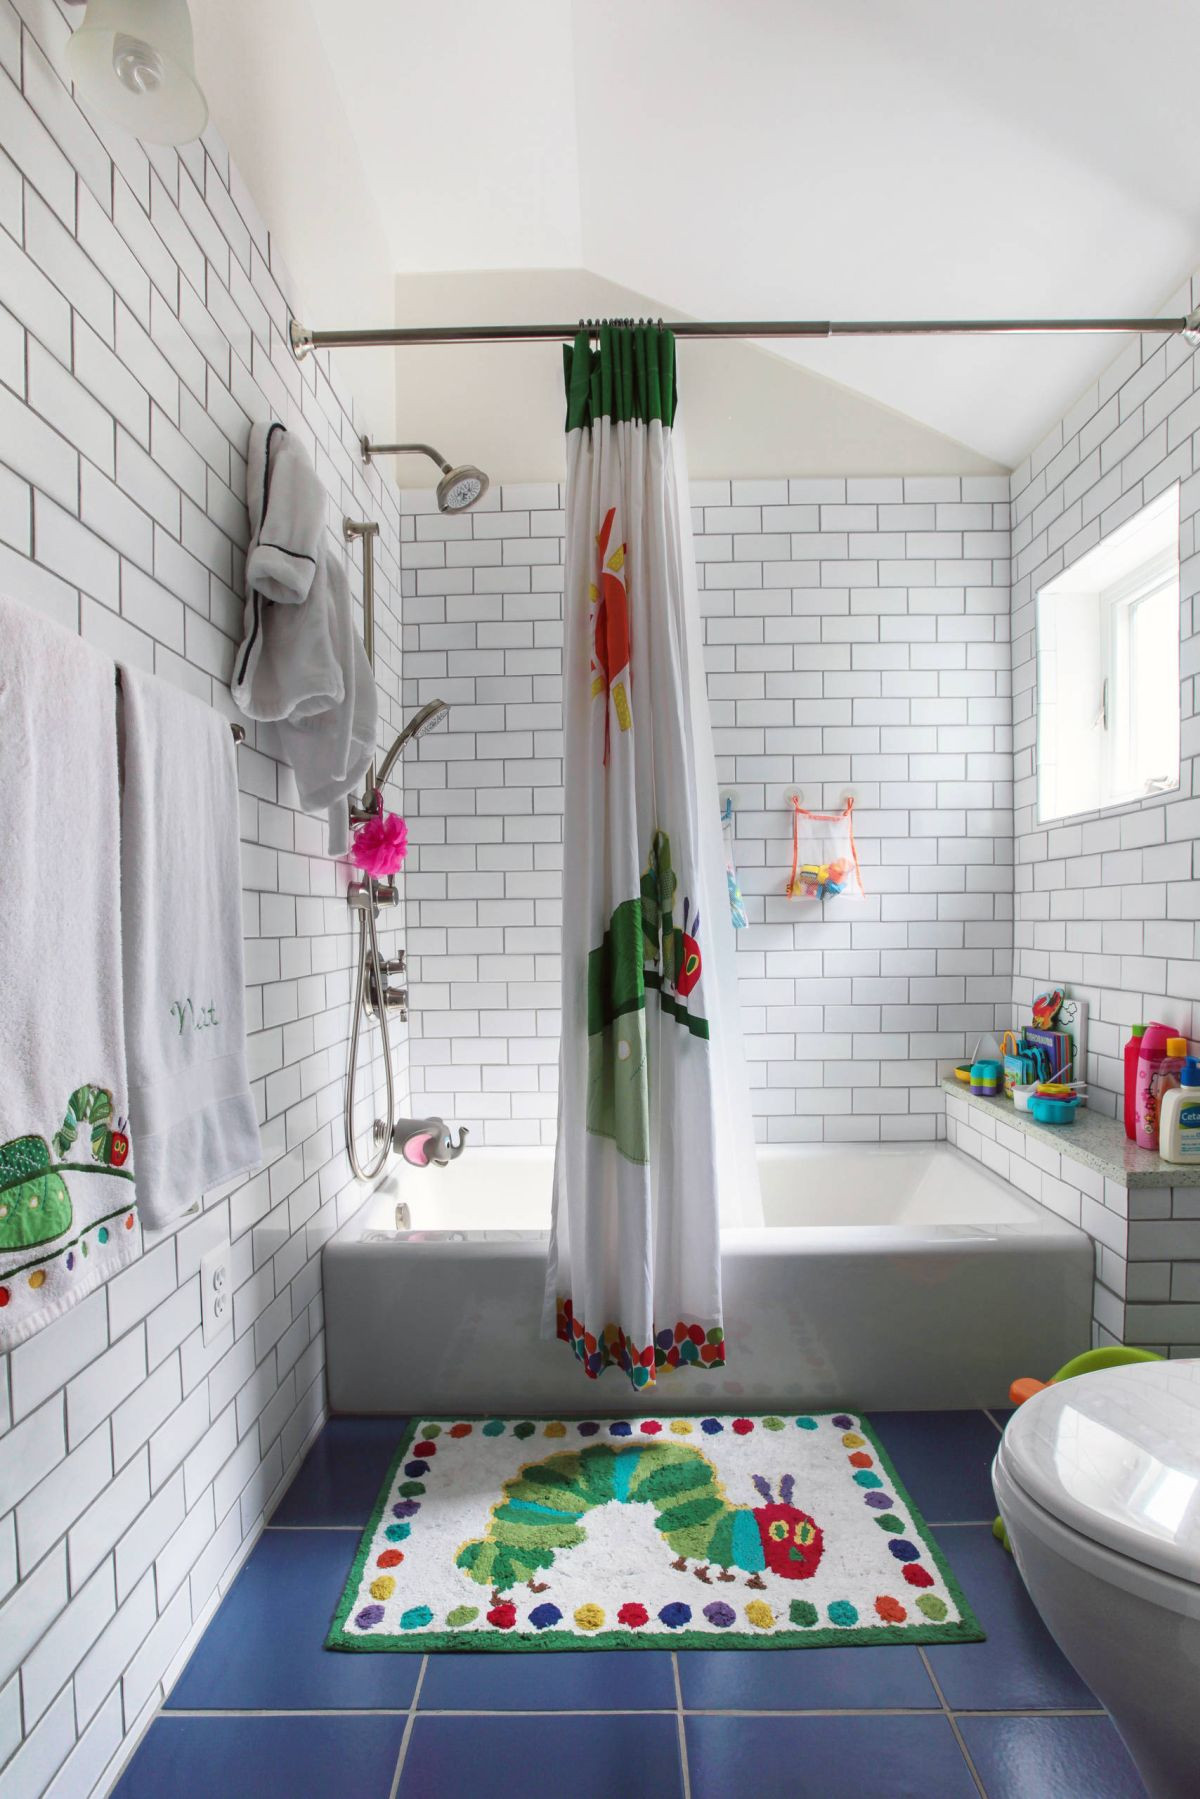 Kids Bathroom Pictures
 12 Tips for The Best Kids Bathroom Decor